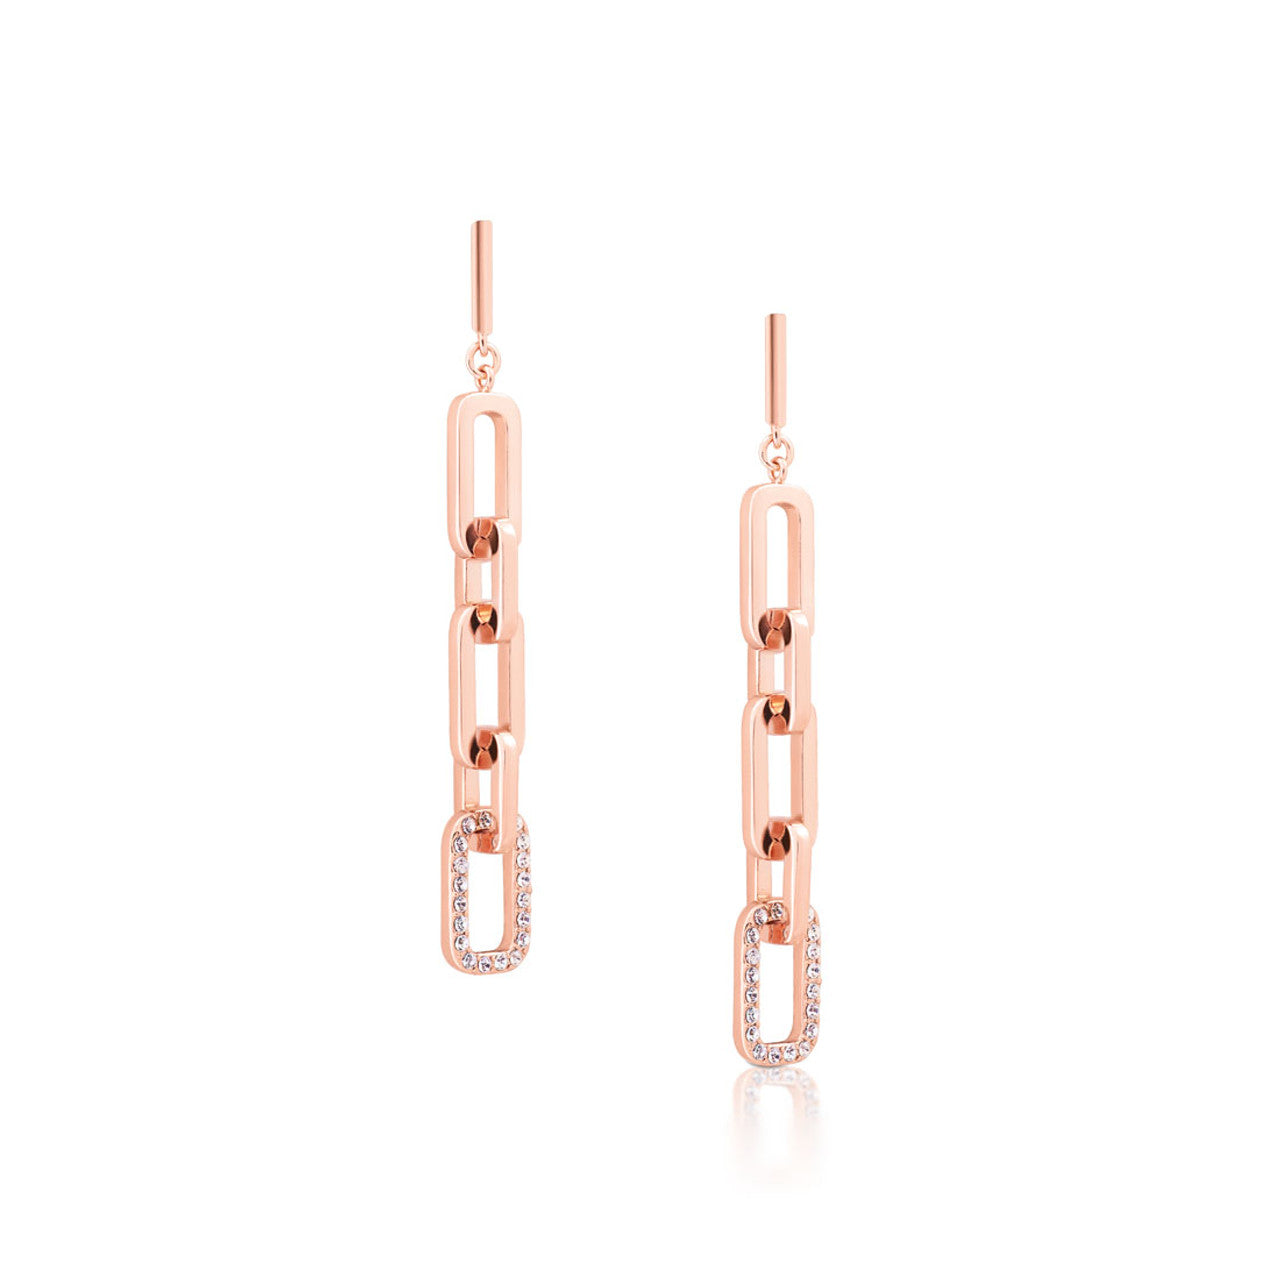 Romi Earrings - Chain Link - Rose Gold/Silver